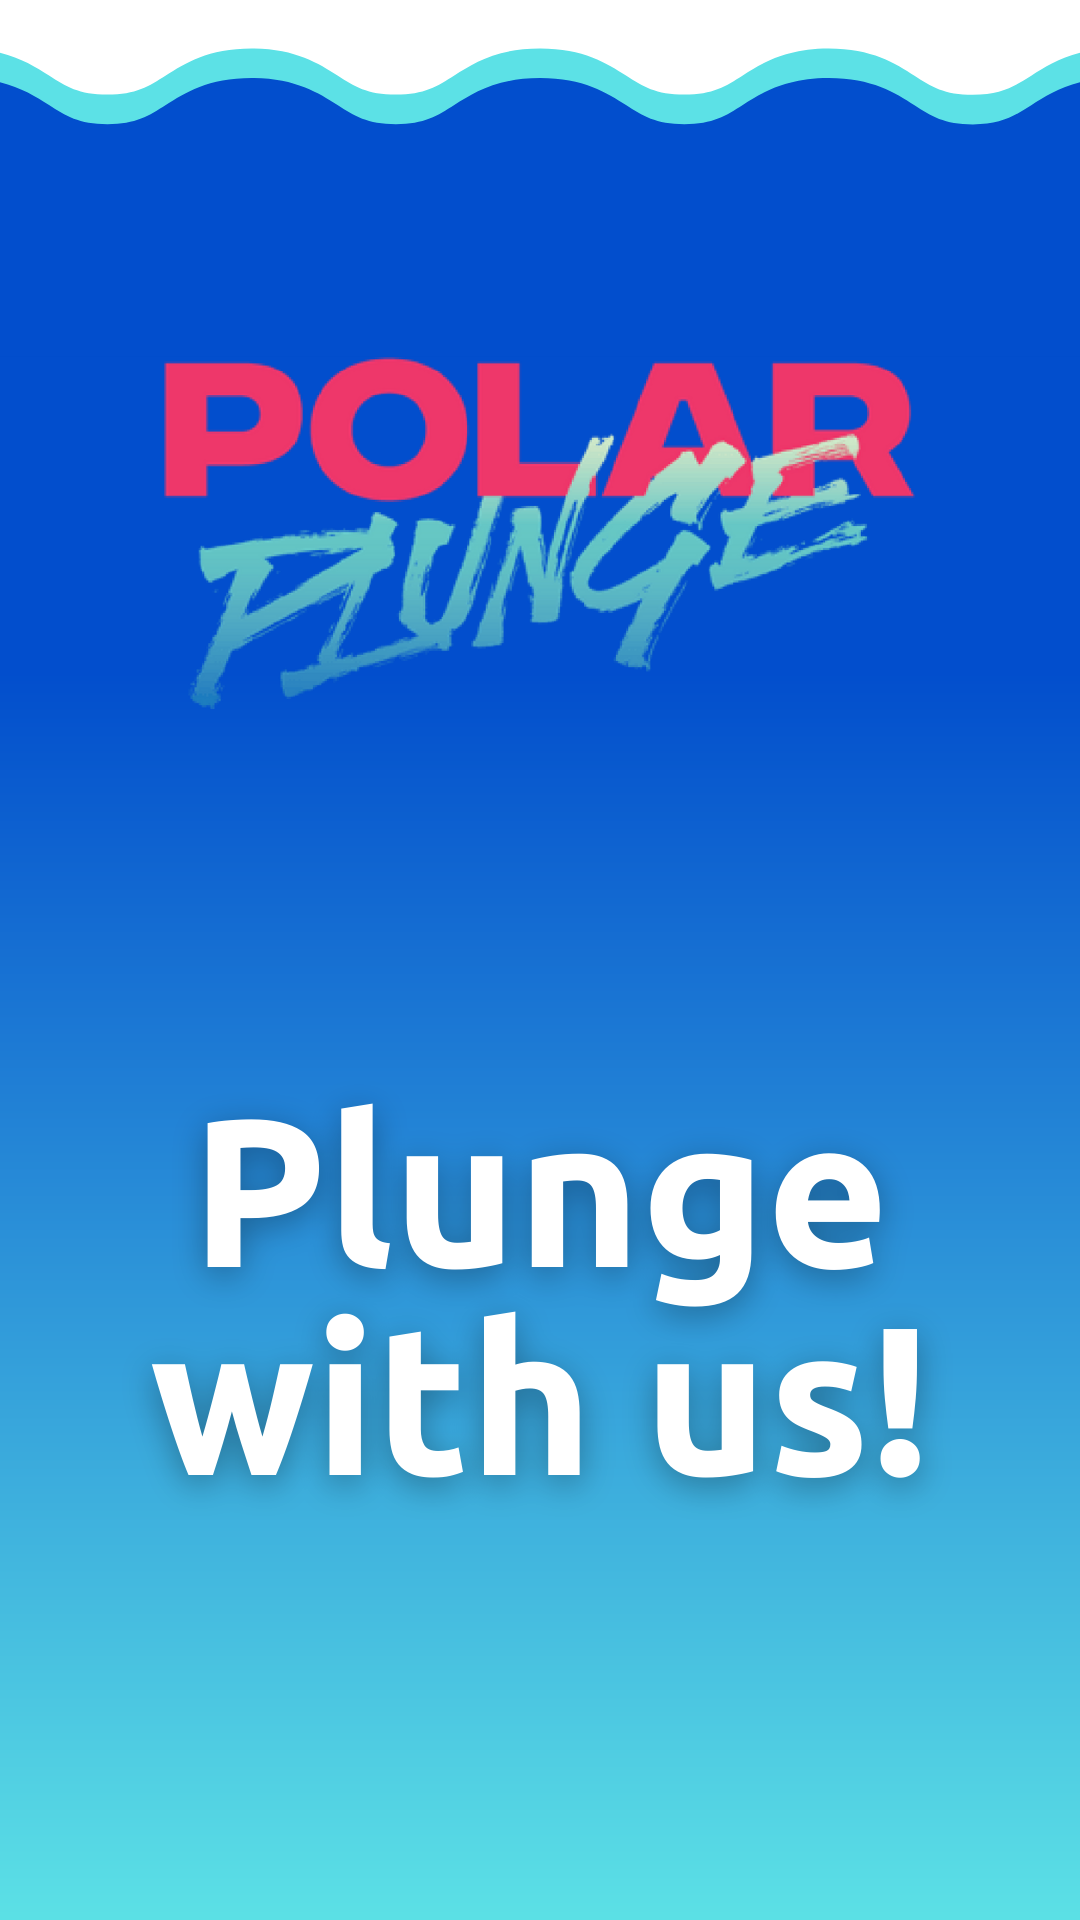 Polar Plunge Orlando Instagram 3